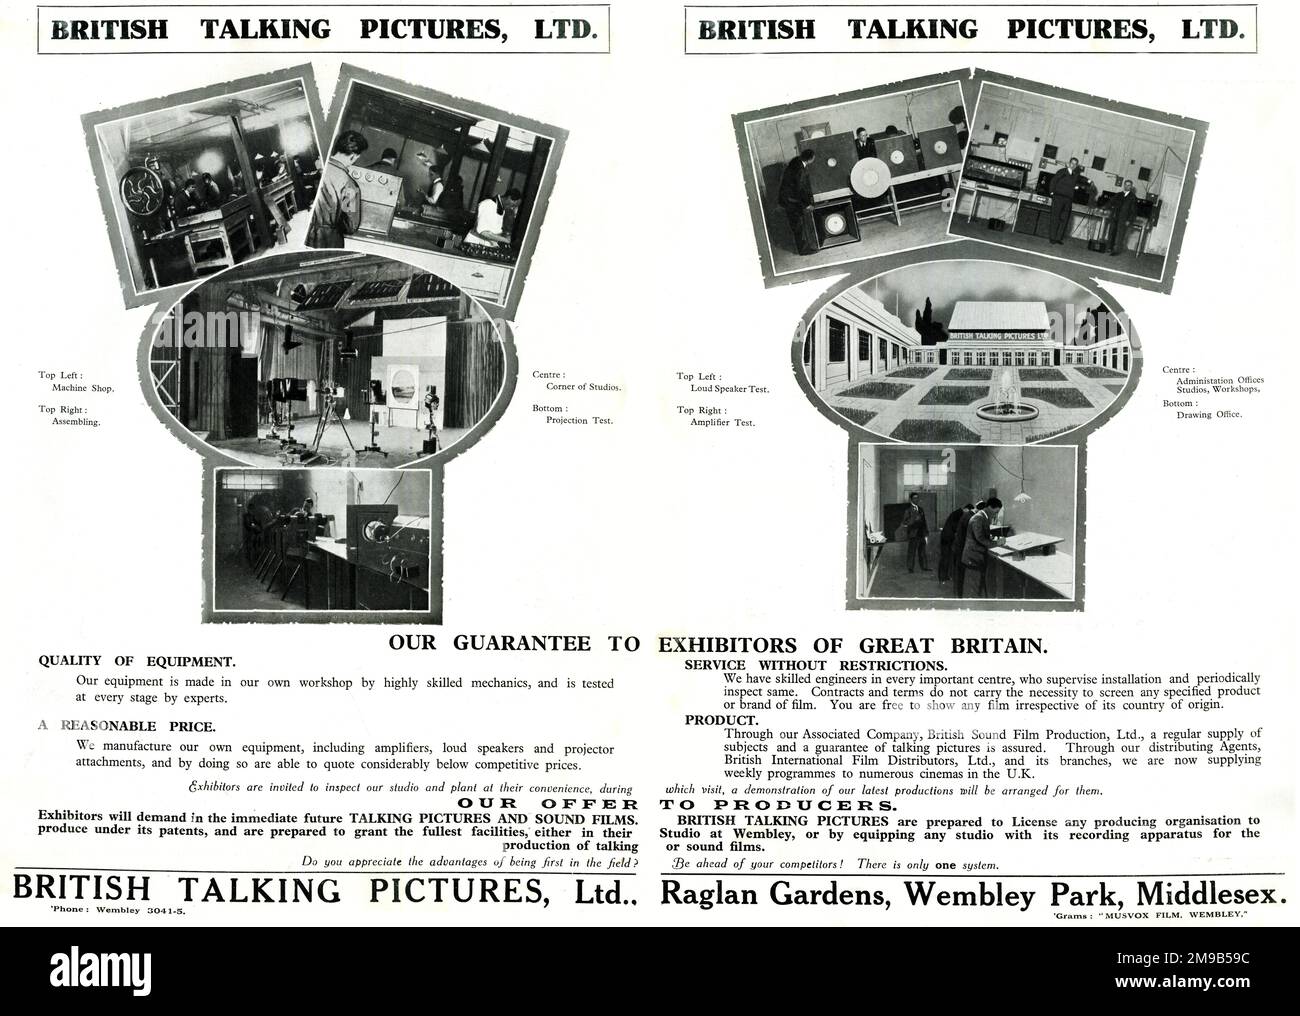 British Talking Pictures Ltd, Raglan Gardens, Wembley Park, Middlesex (Norte de Londres) Foto de stock